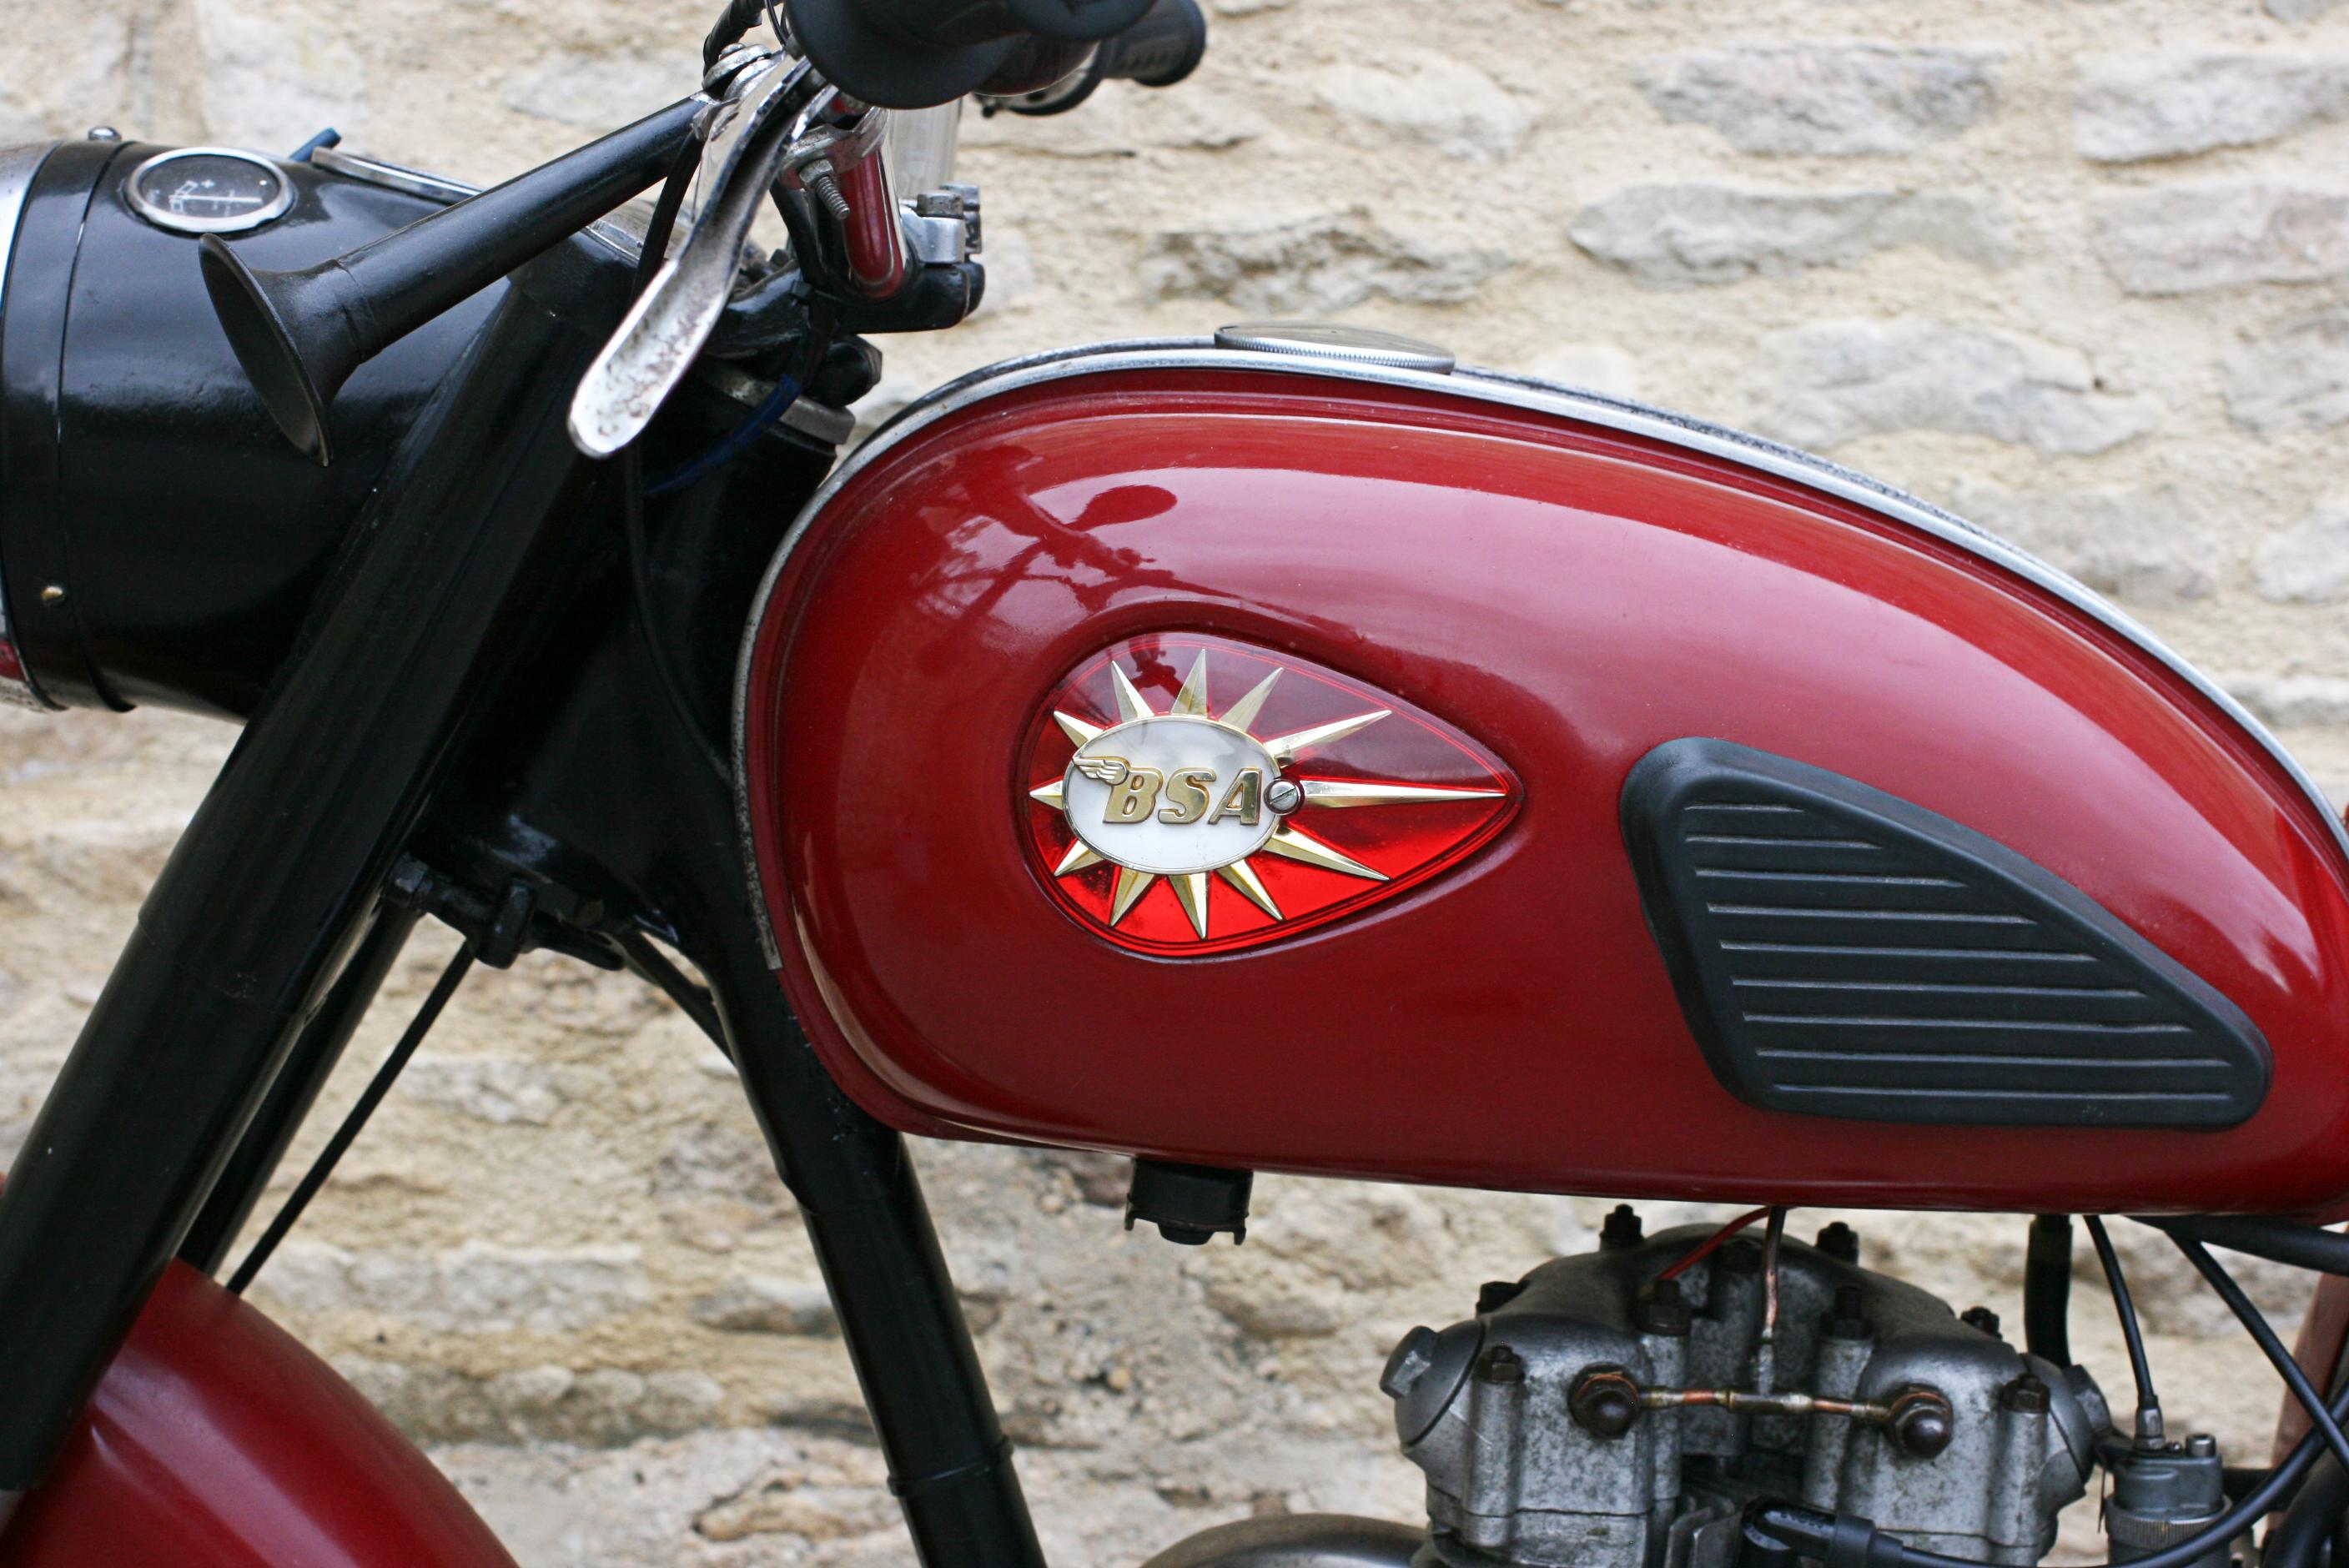 Mid-20th Century BSA C15 Motorcycle, 250cc, Isle of Man Registered